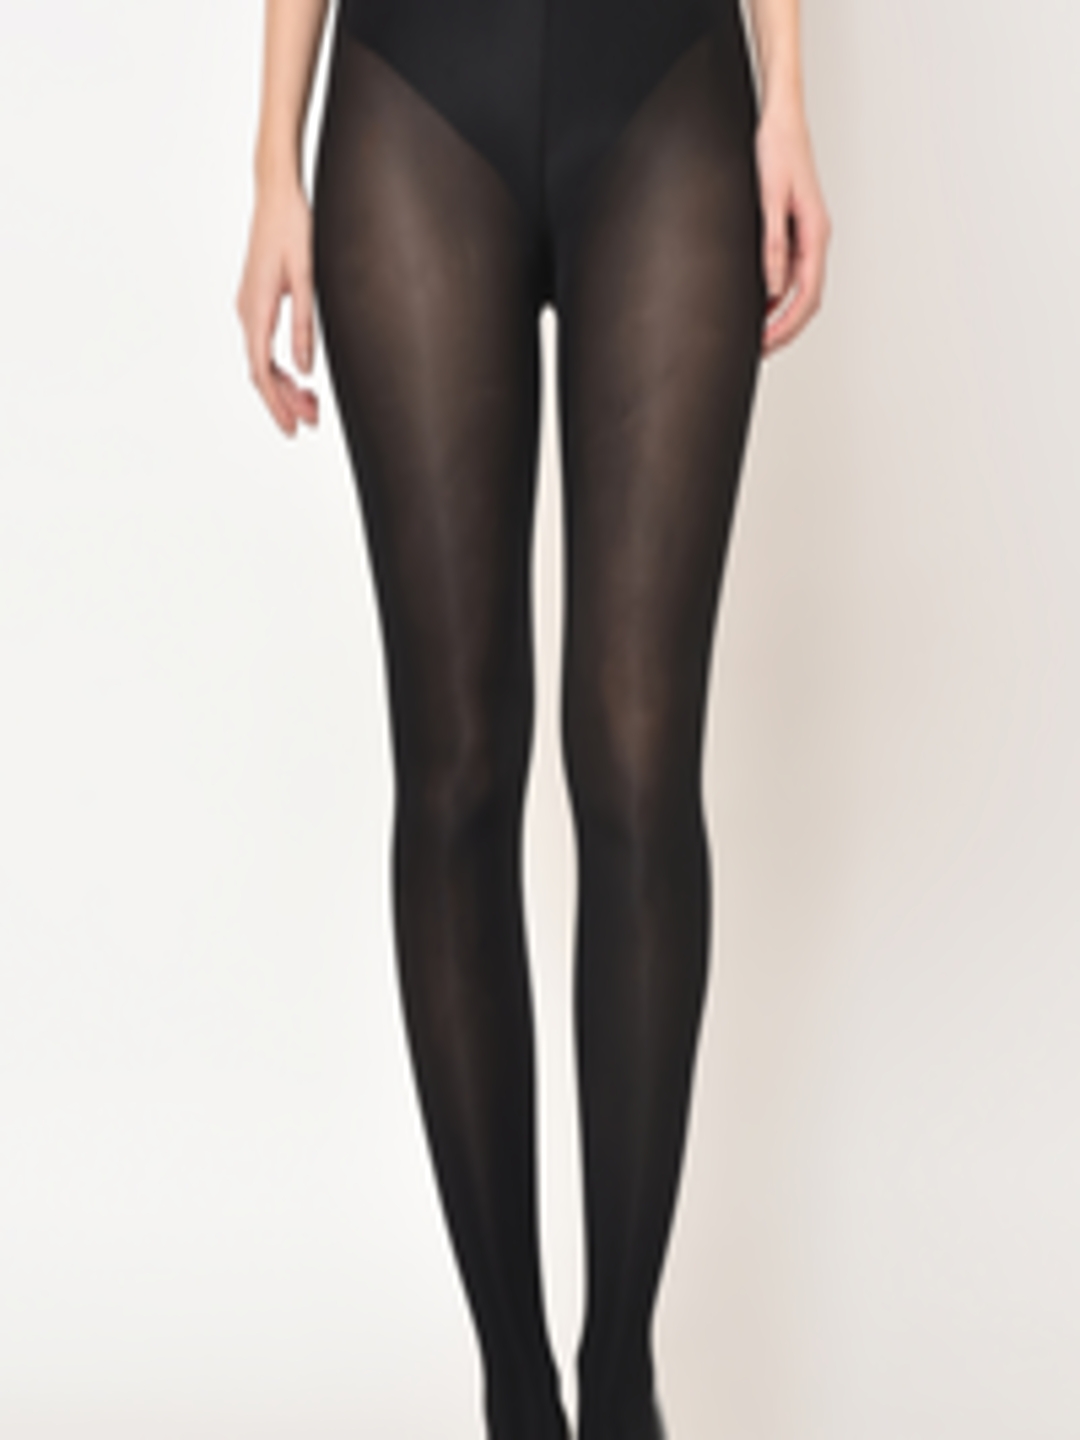 Buy Da Intimo Women Black Solid Semi Sheer Pantyhose Stockings